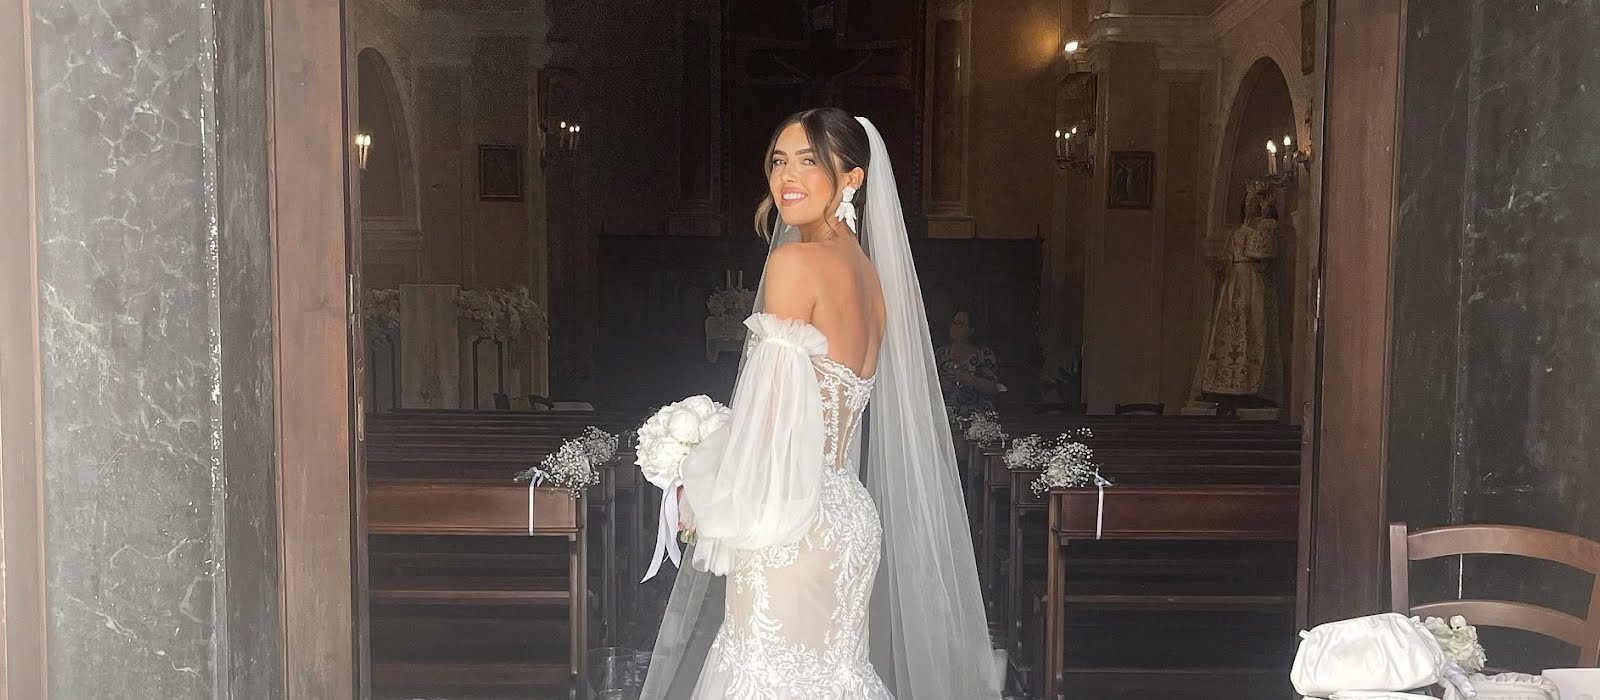 Real Weddings: Bonnie Ryan’s storybook wedding in southern Italy